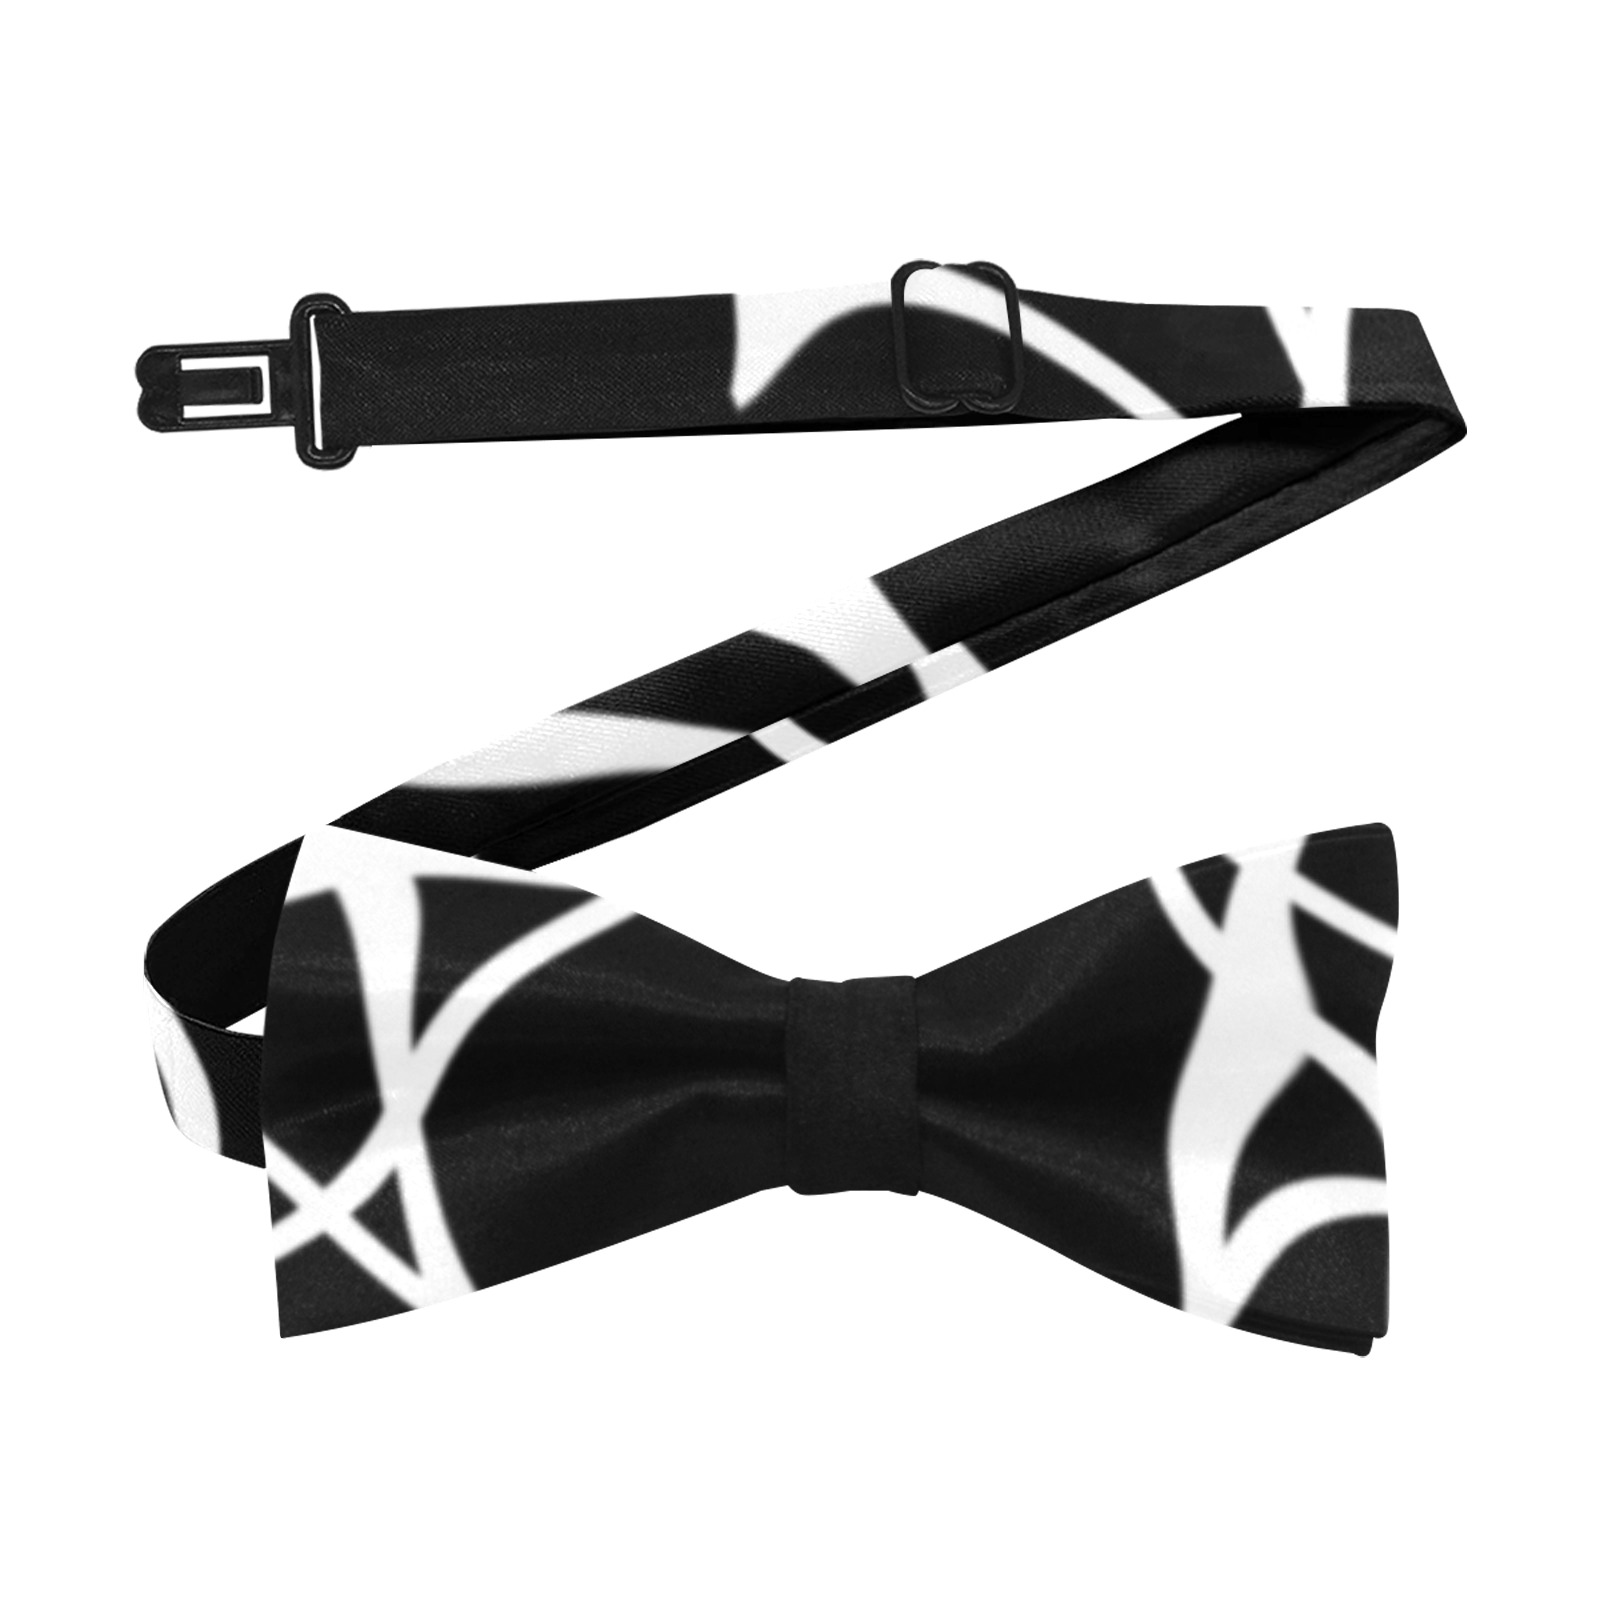 White Interlocking Triangles2 Noisy black Custom Bow Tie